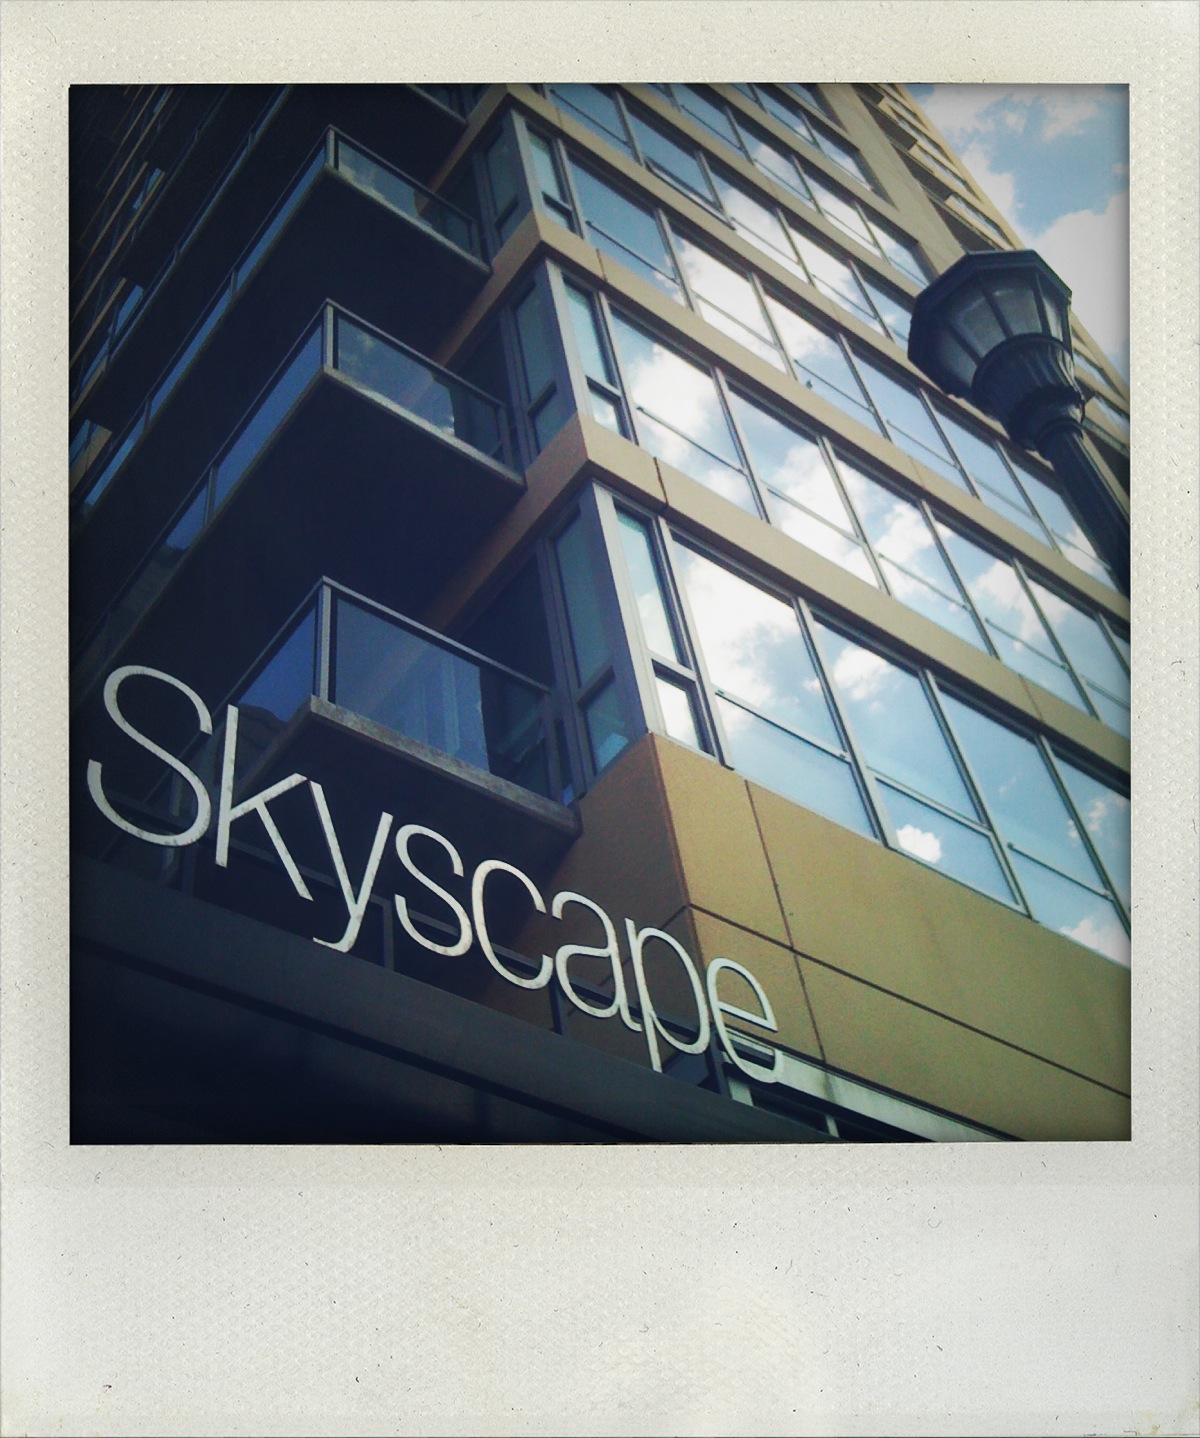 Skyscape Condos | Minneapolis Condos & Minneapolis Real Estate by Ben Ganje